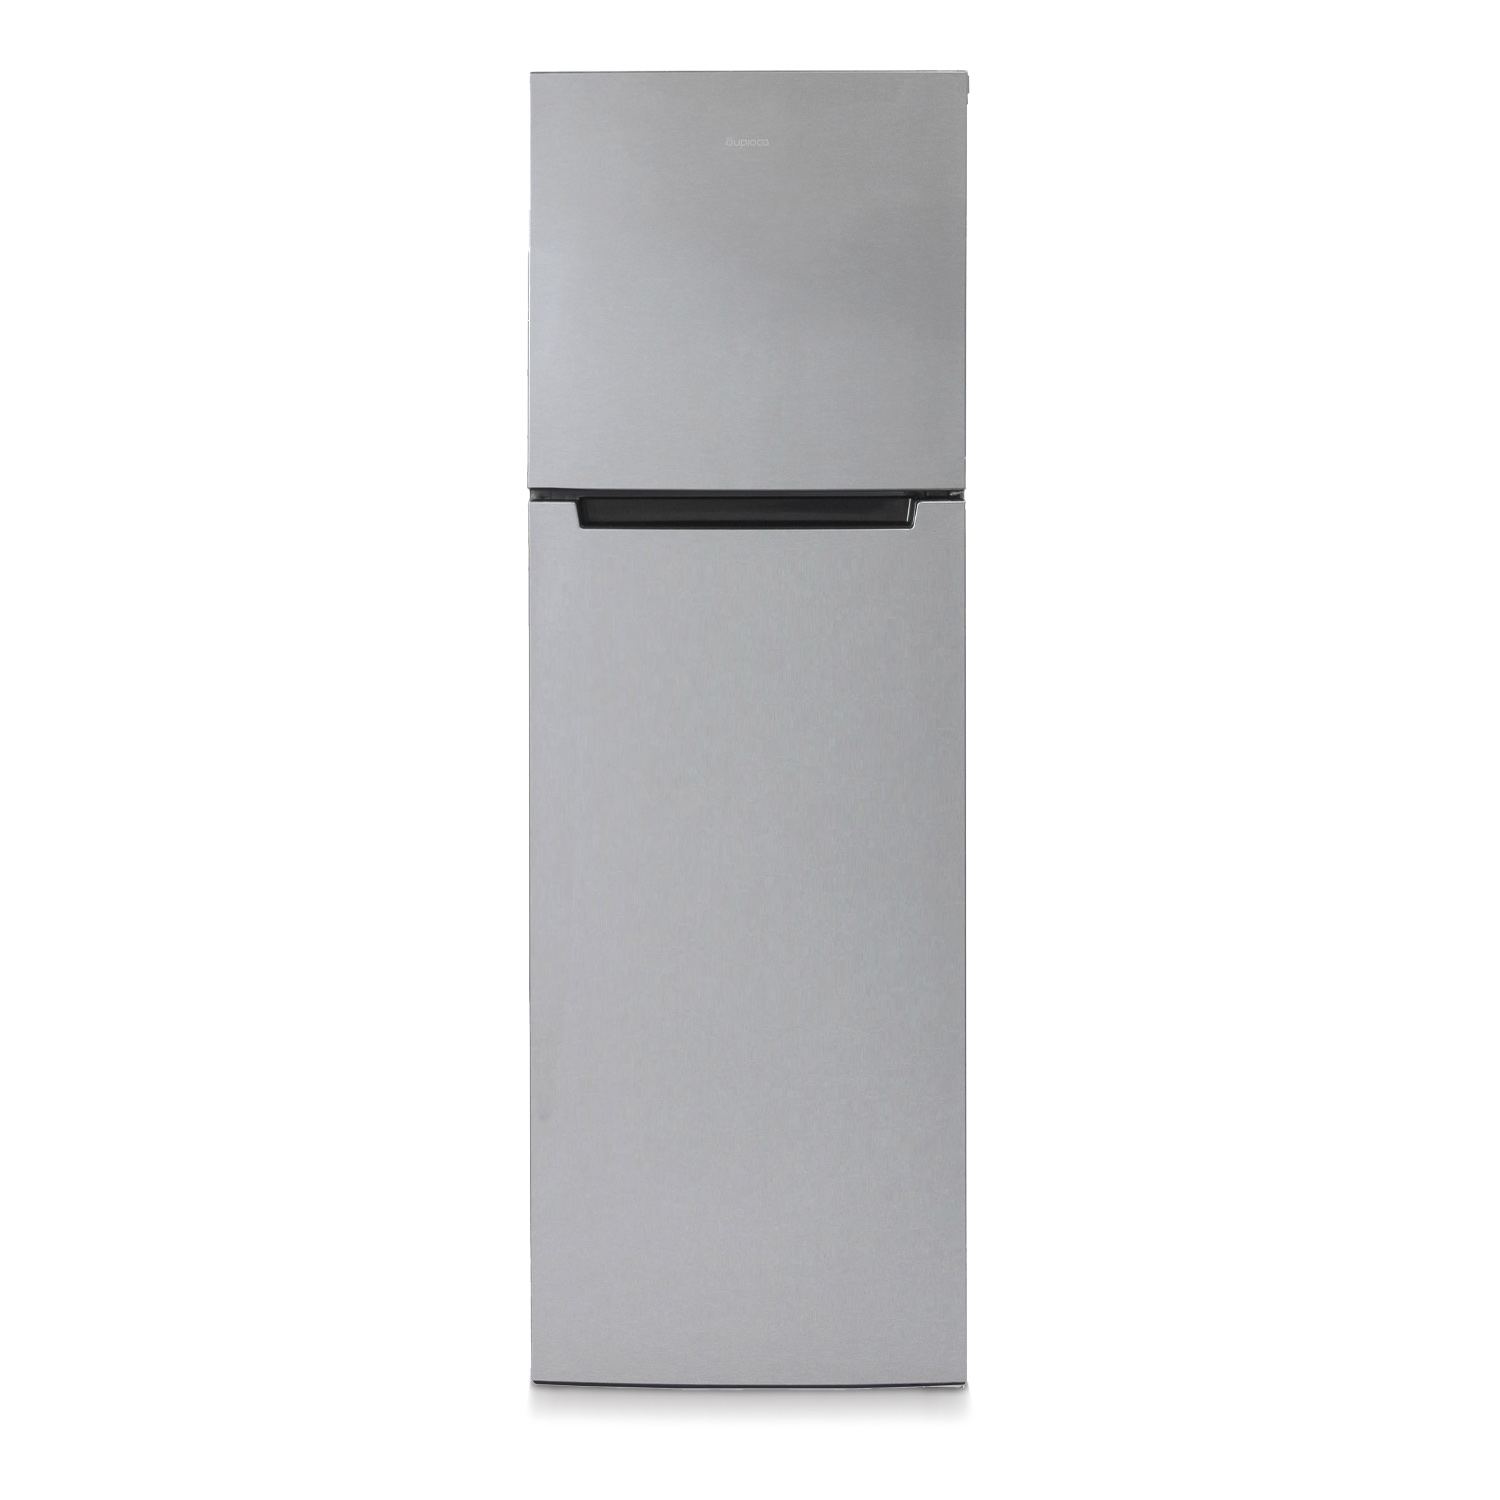 Холодильник Бирюса C6039 серебристый холодильник бирюса m118 серебристый